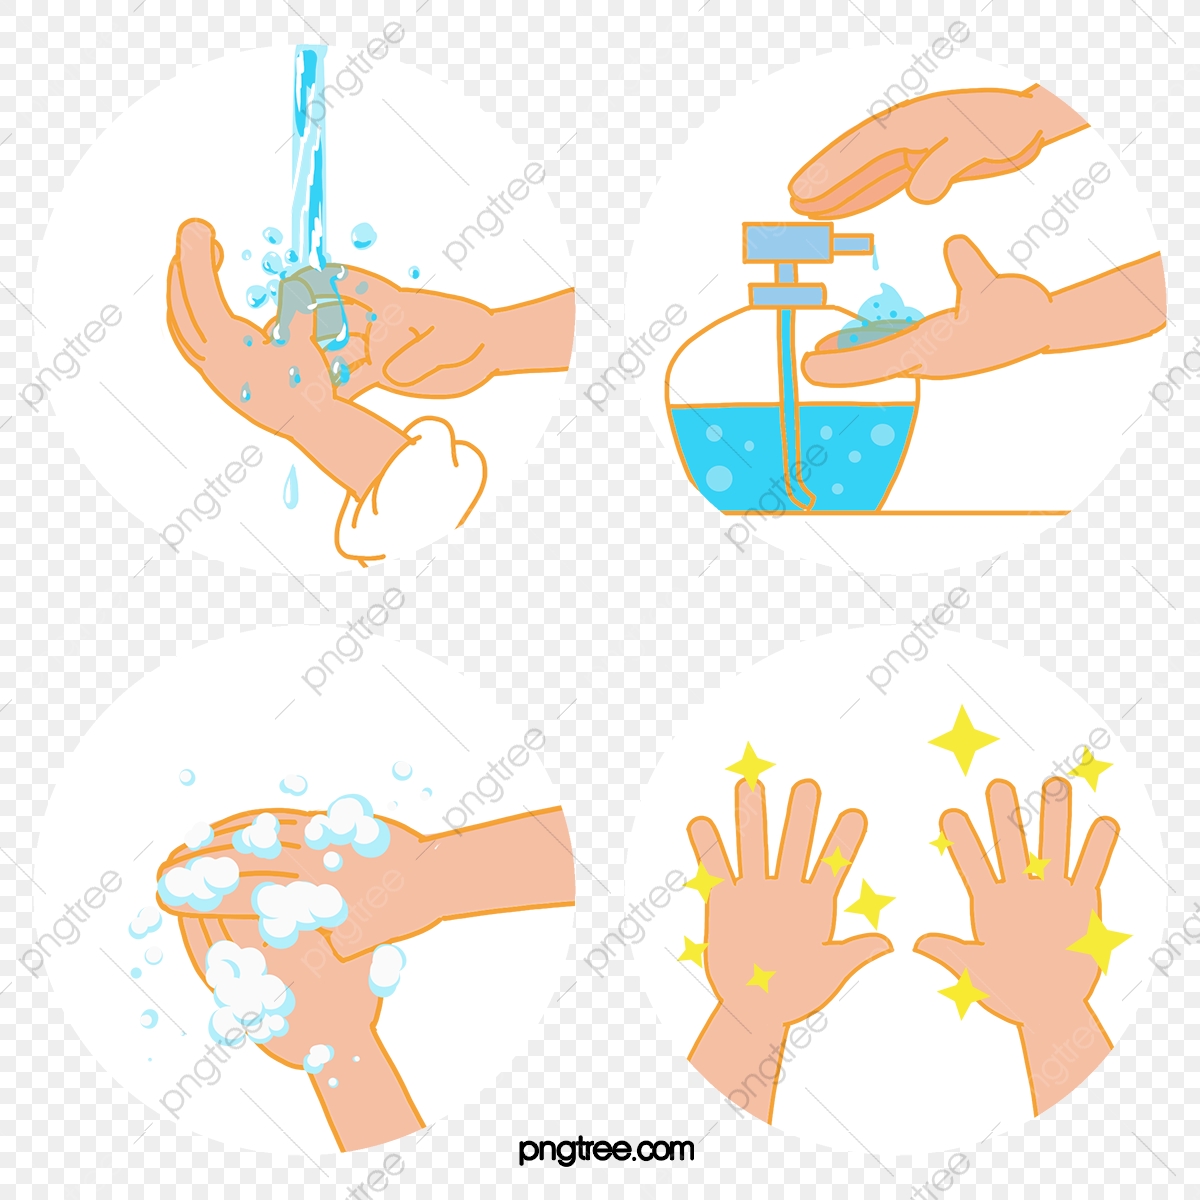 Washing Hand PNG - 180717